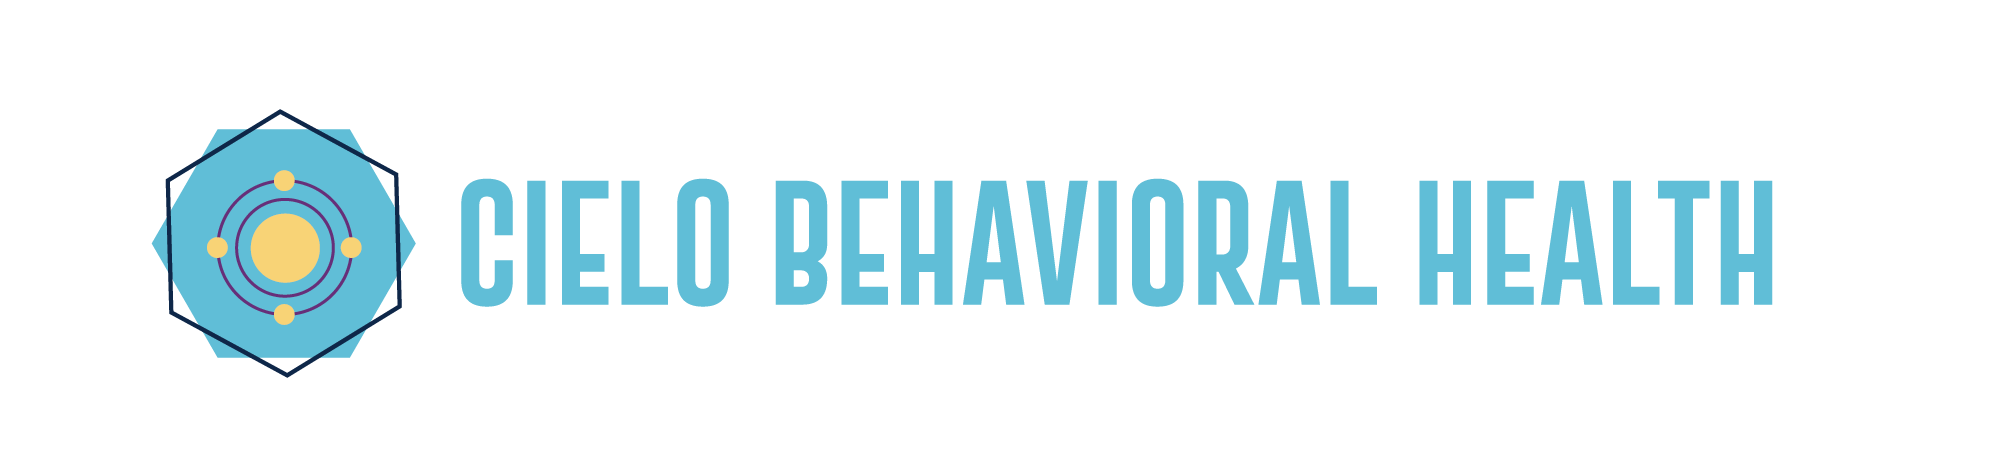 Cielo Behavioral Health logo